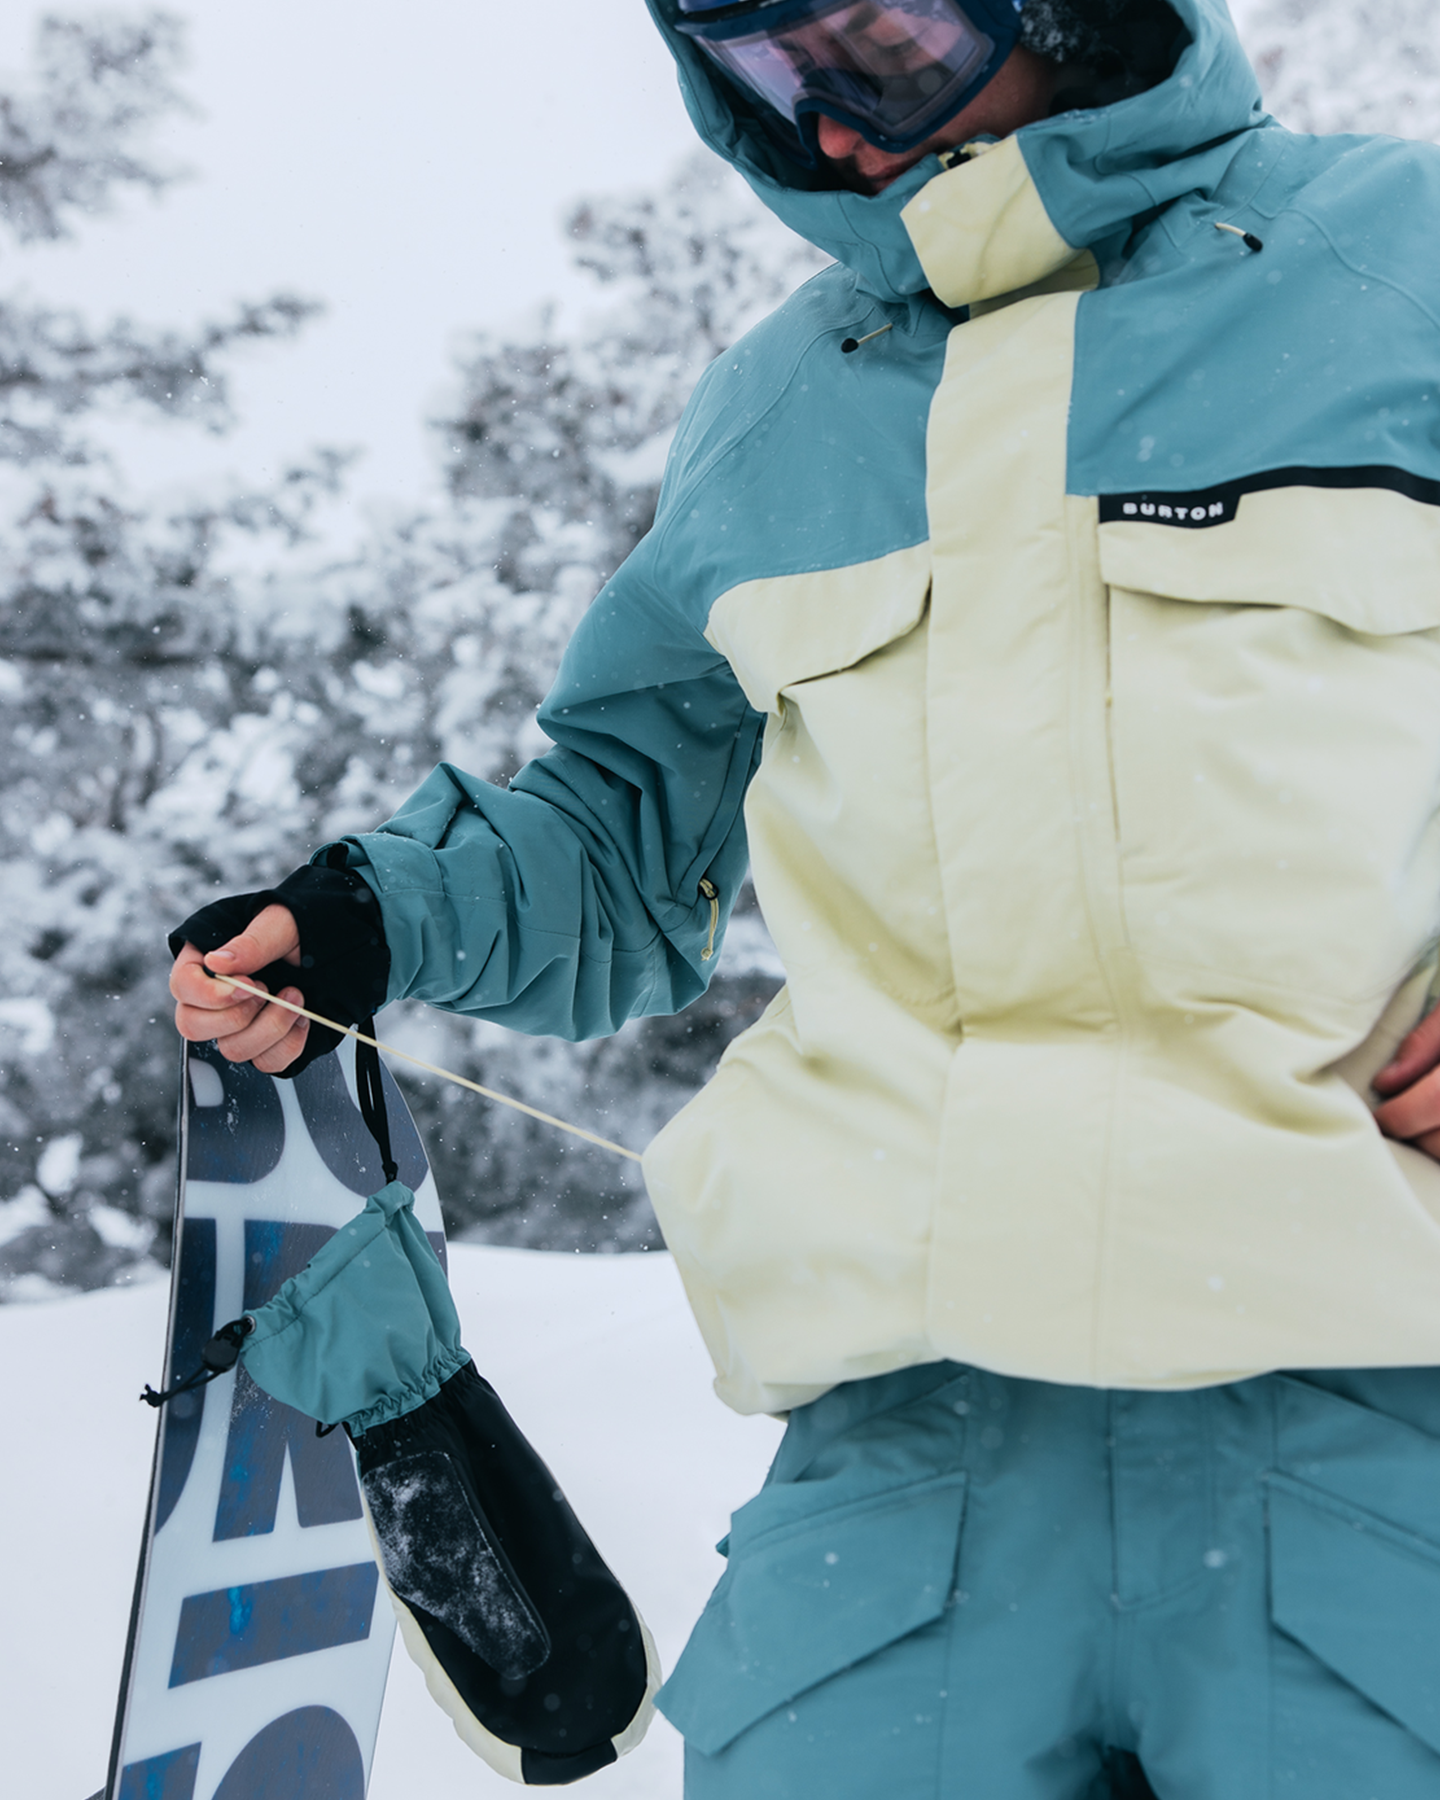 Burton Men's Covert 2.0 Snow Jacket - Rock Lichen/Mushroom Men's Snow Jackets - Trojan Wake Ski Snow